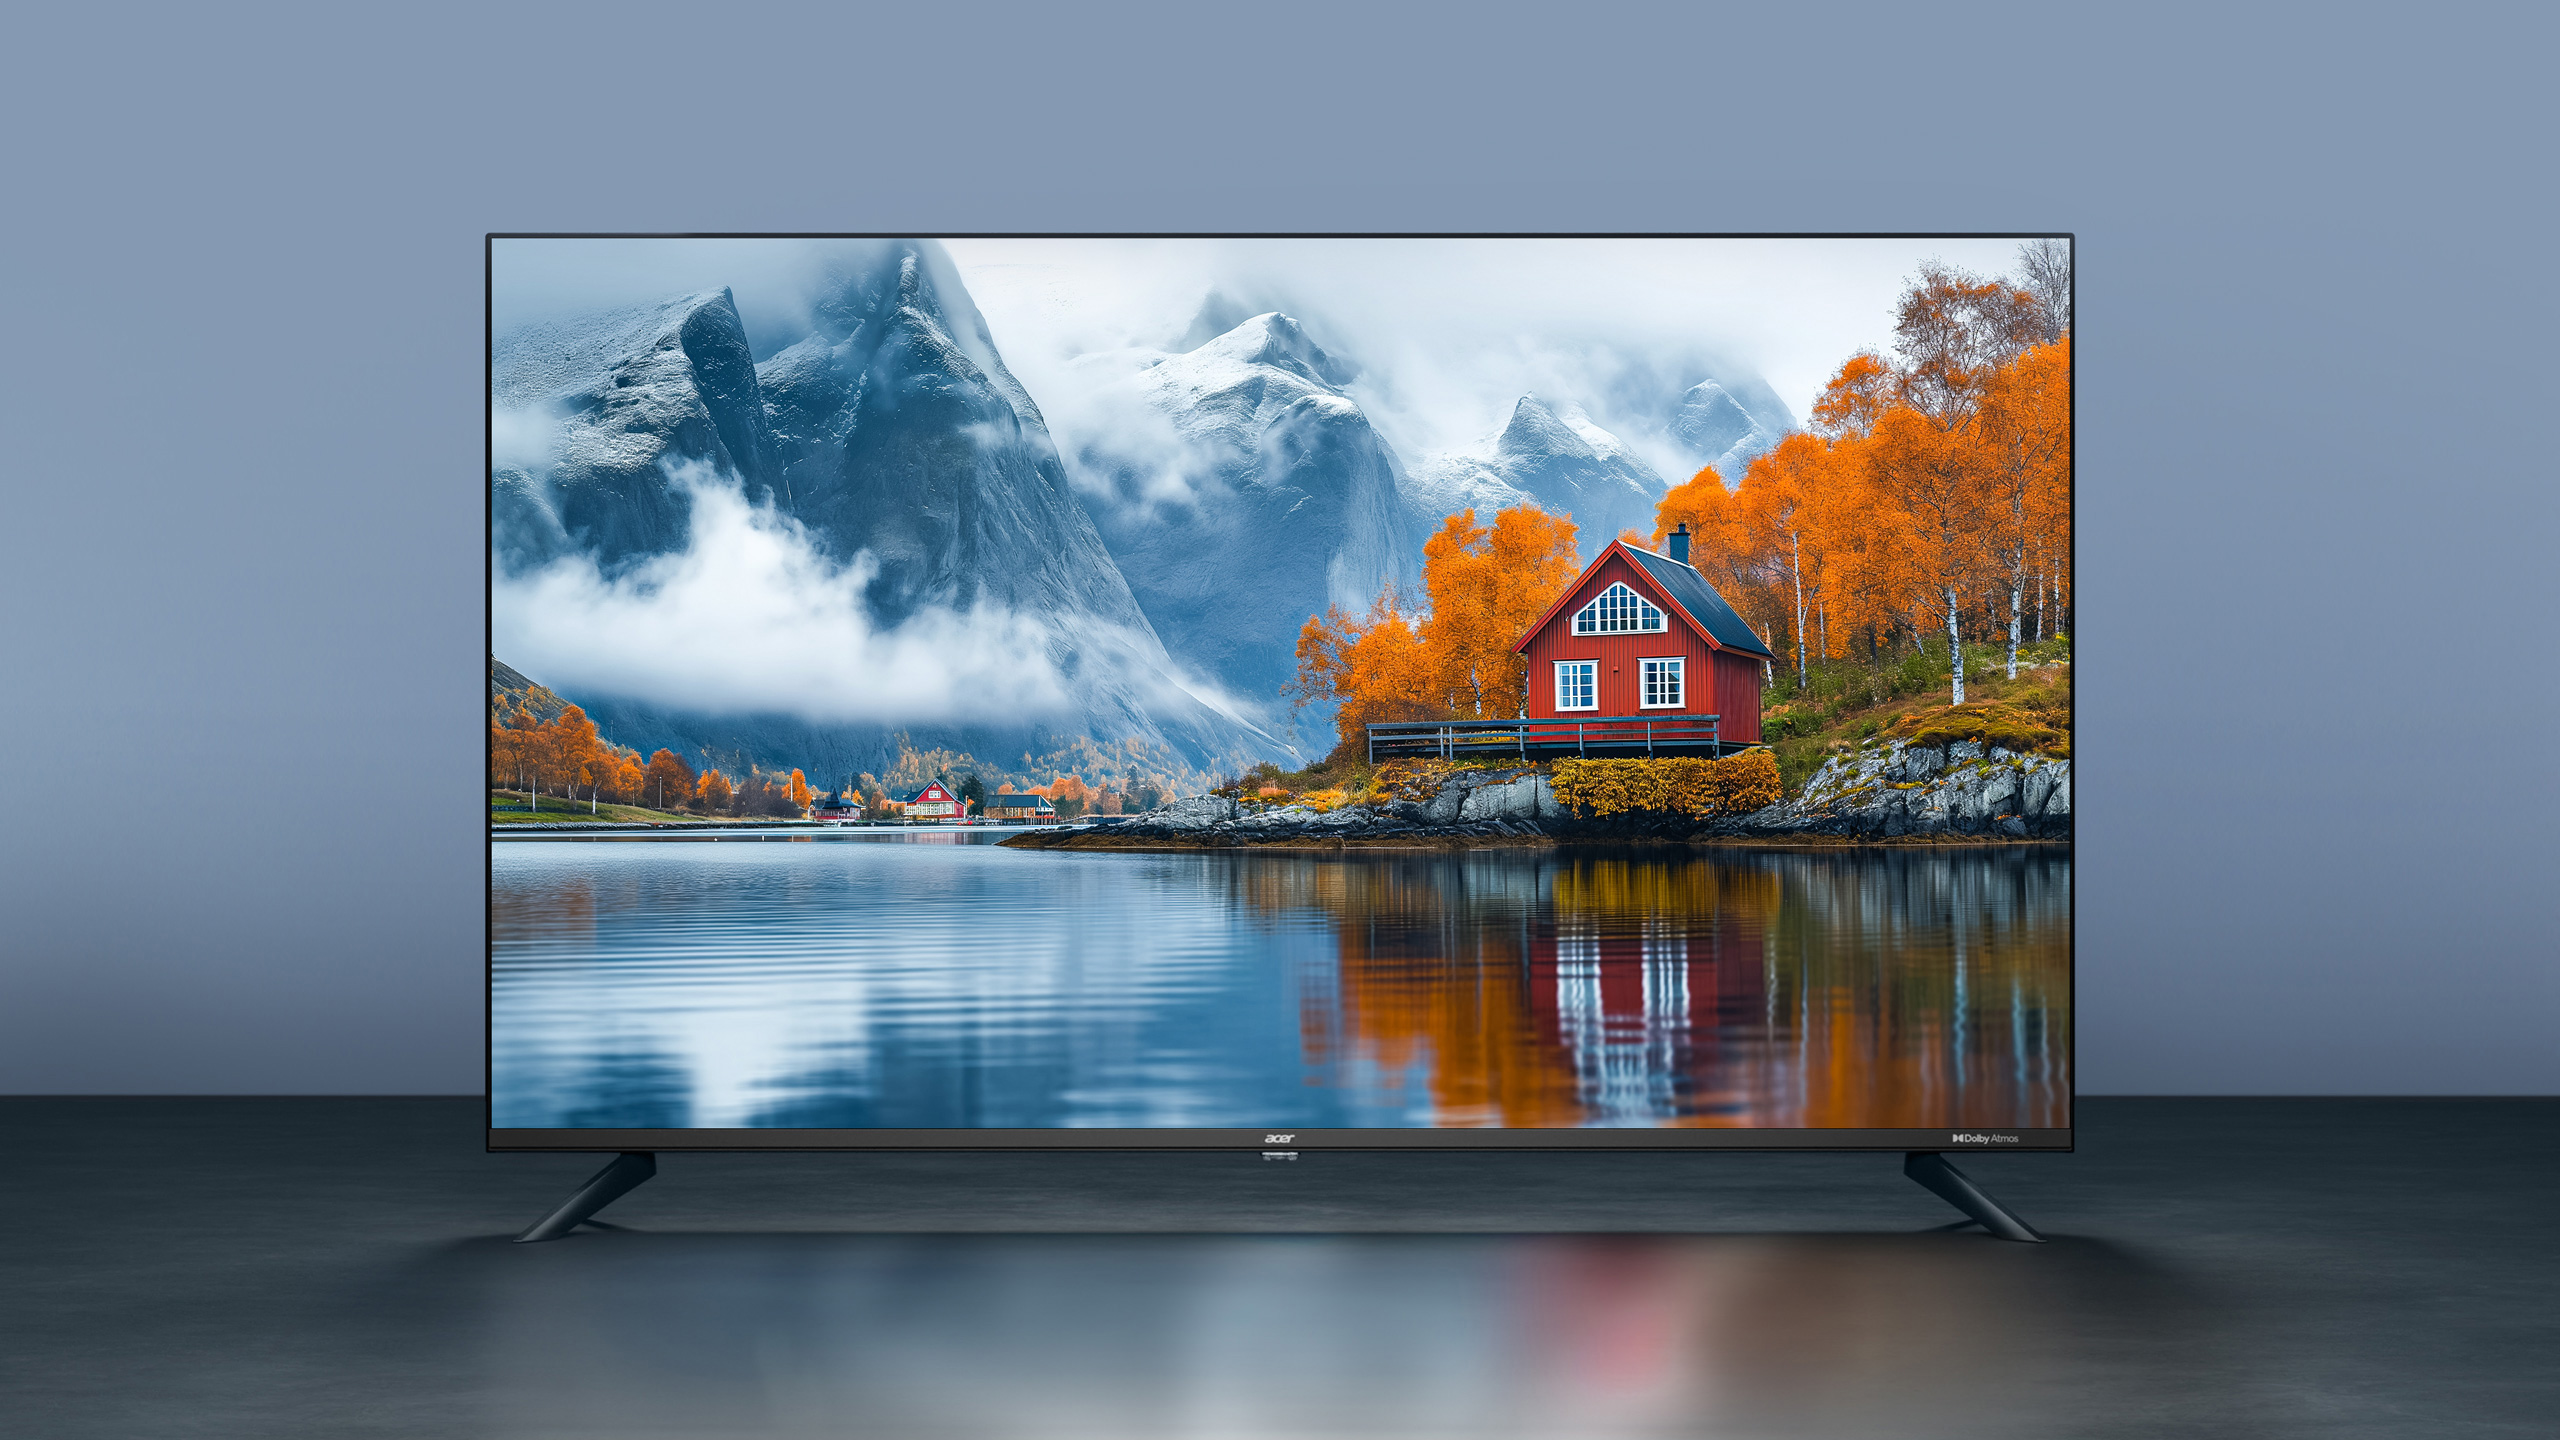 G Series | HDR10+ | Acer TV | Indkal